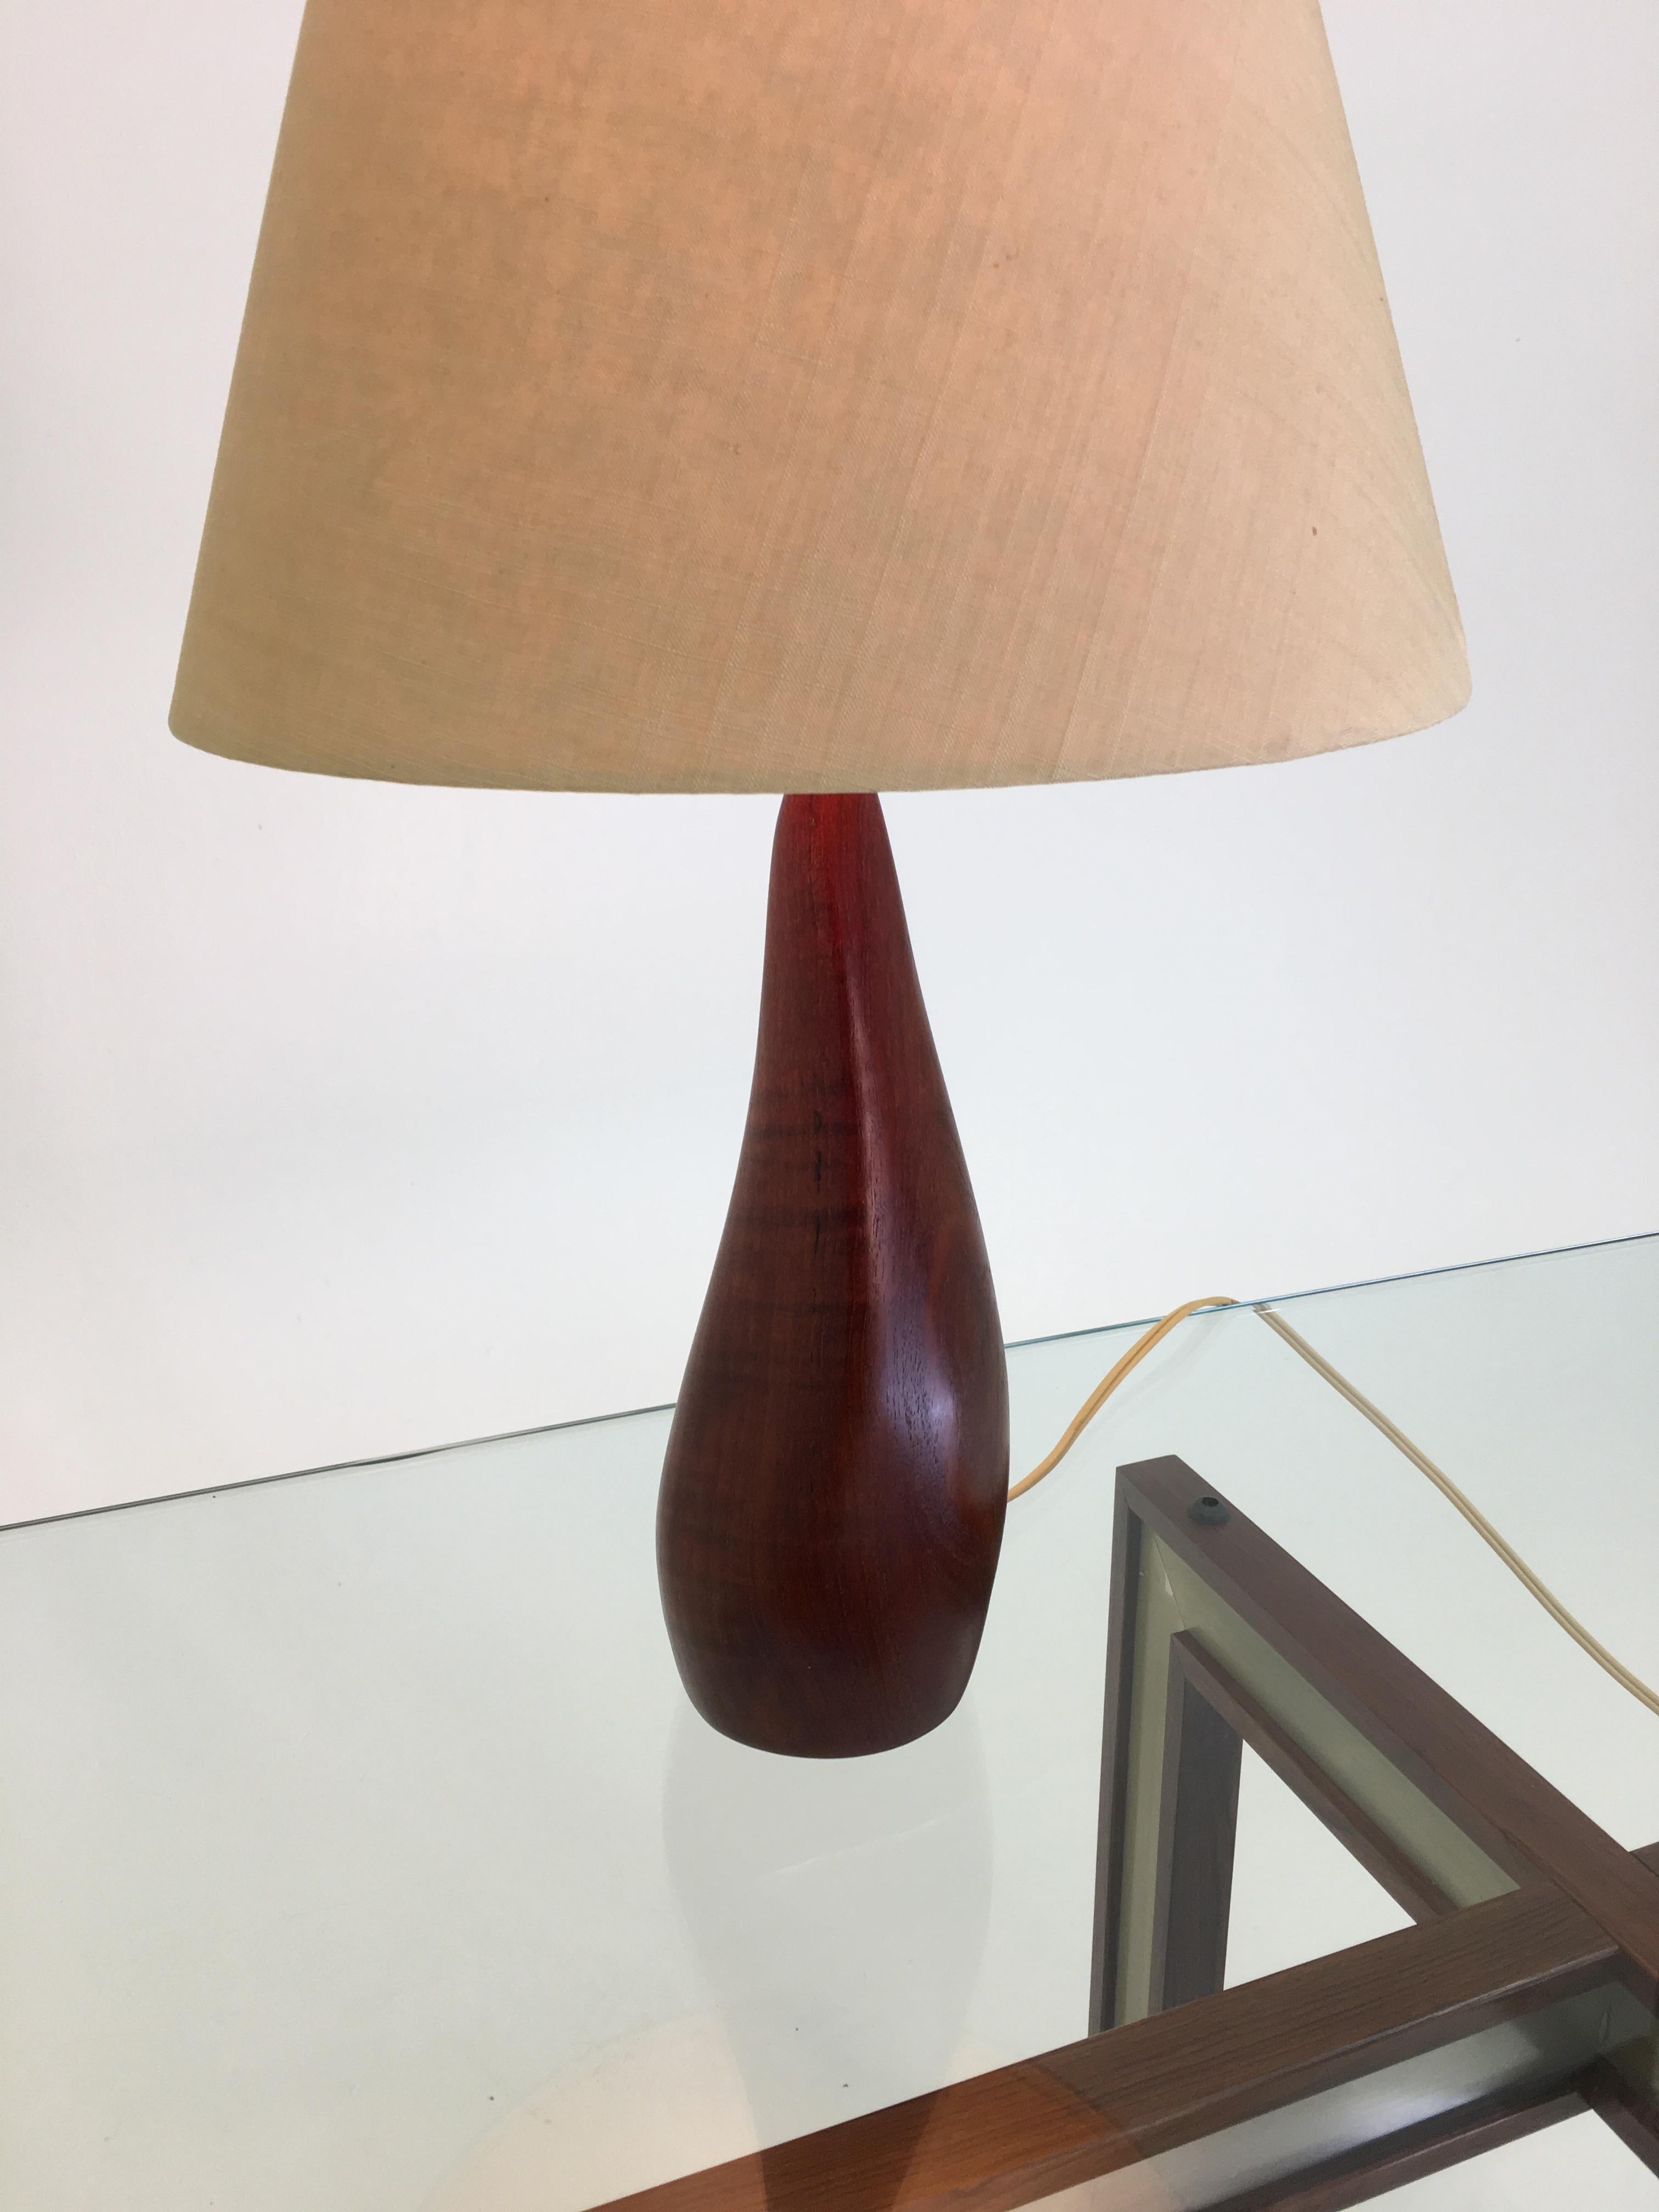 Teak table lamp by Ernst Henriksen
19